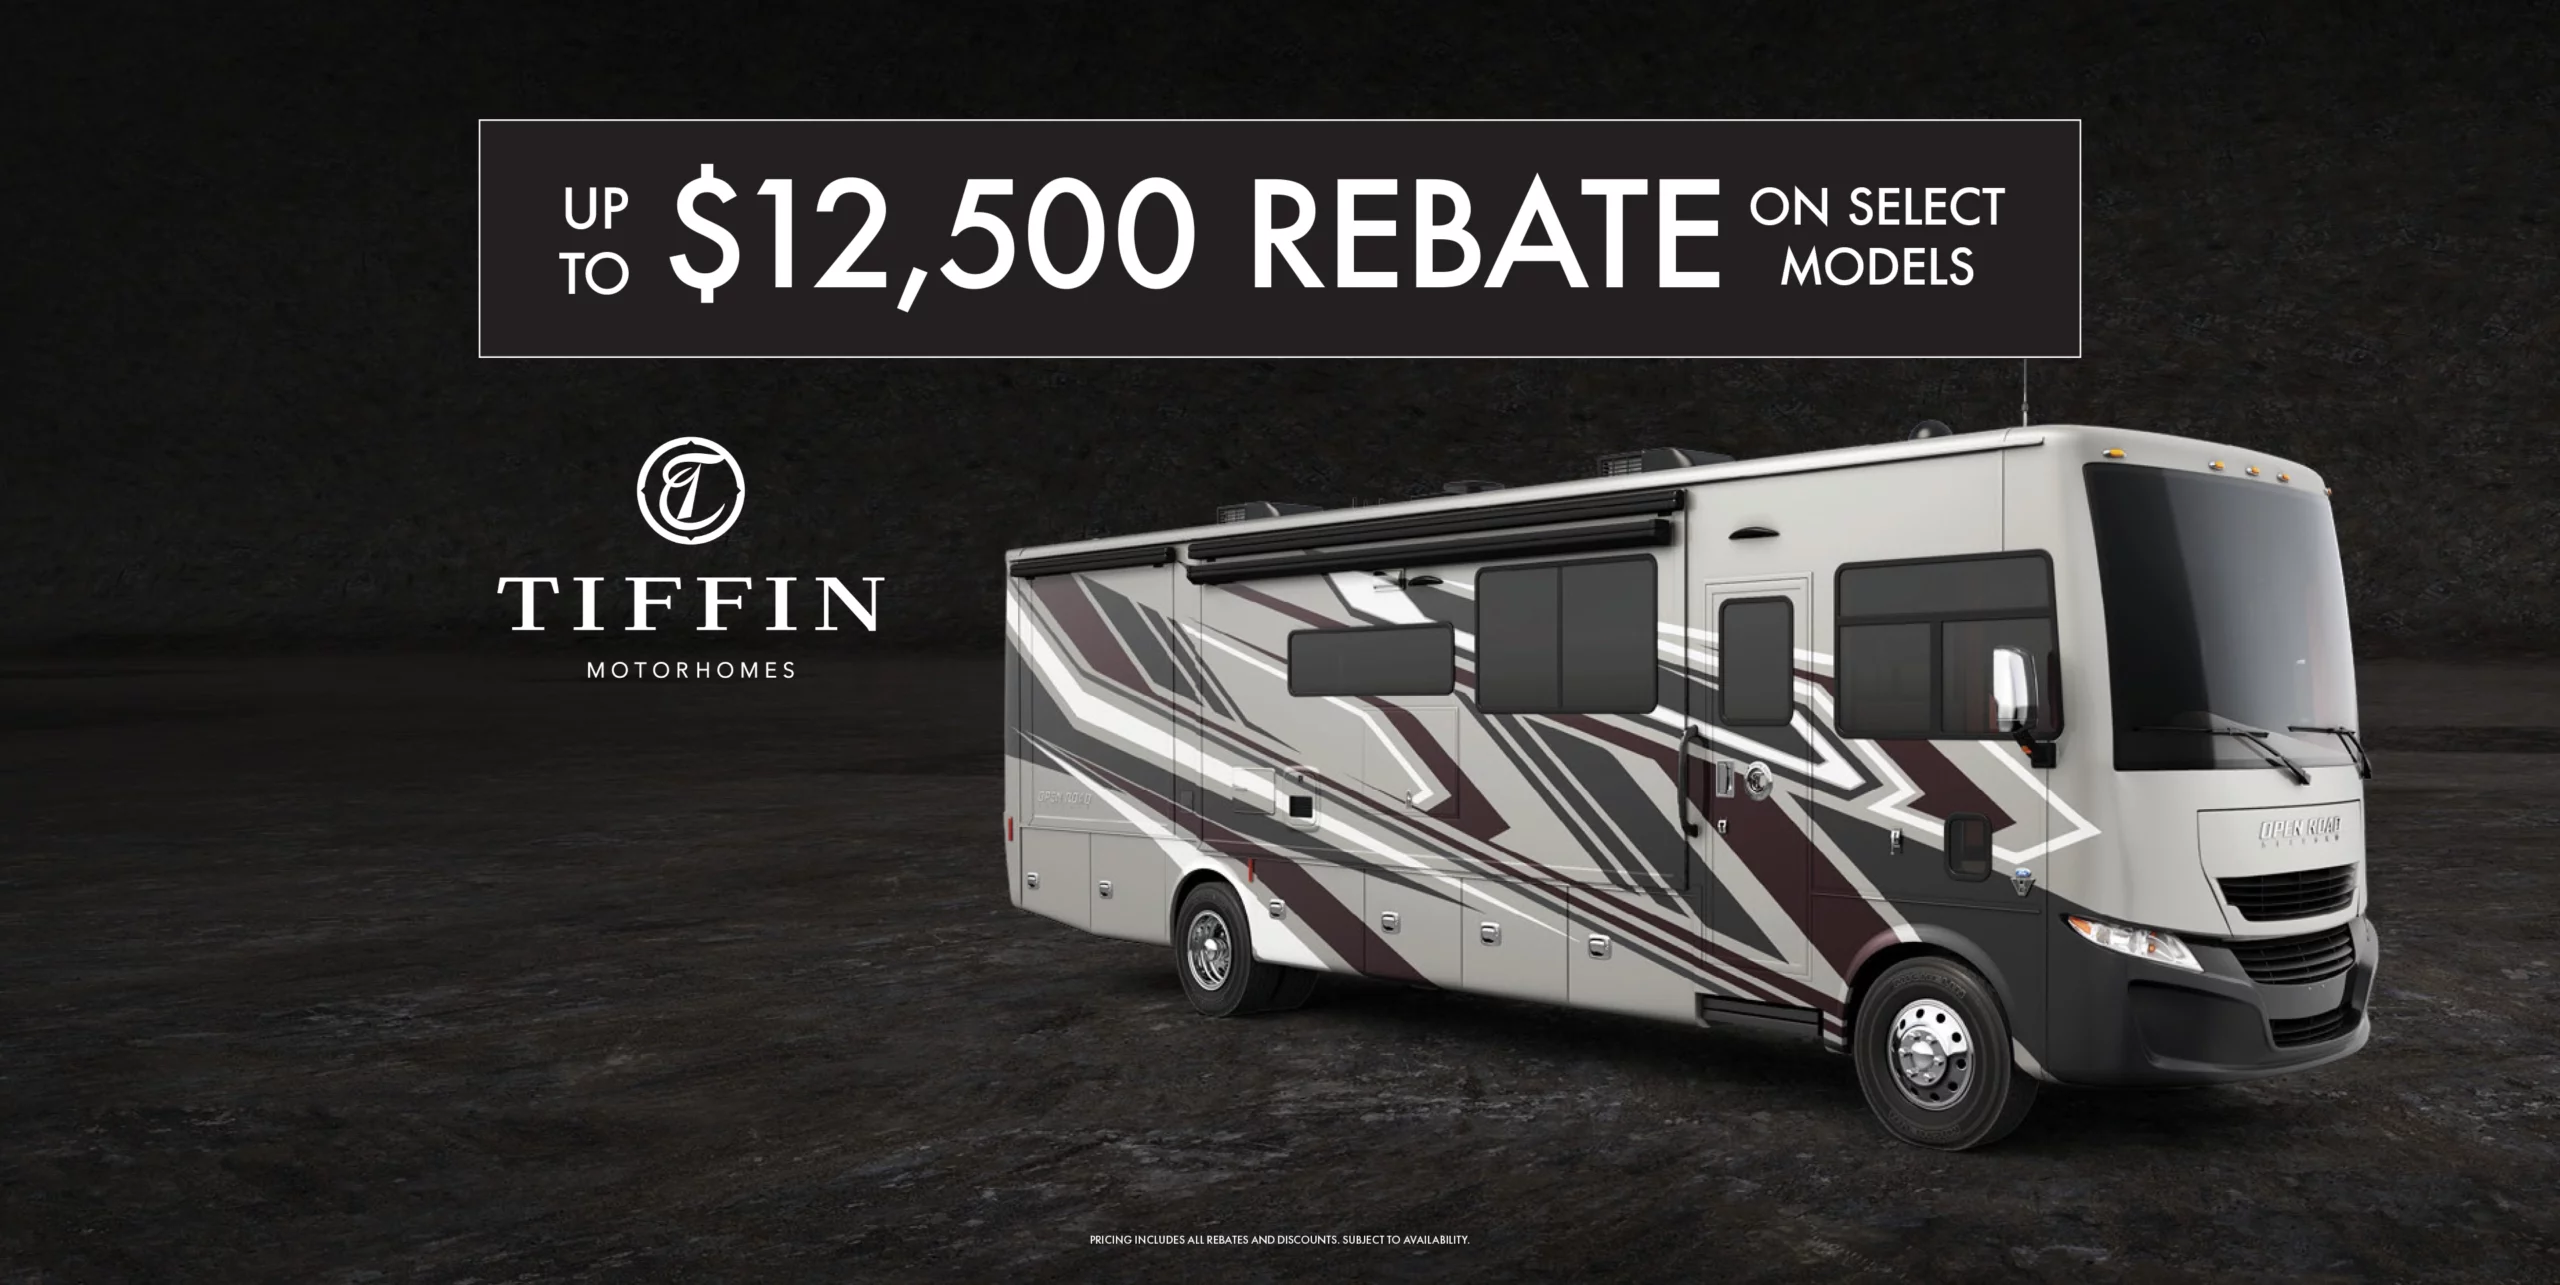 Up To $12,500 Rebate on Select Tiffin Motorhome Models